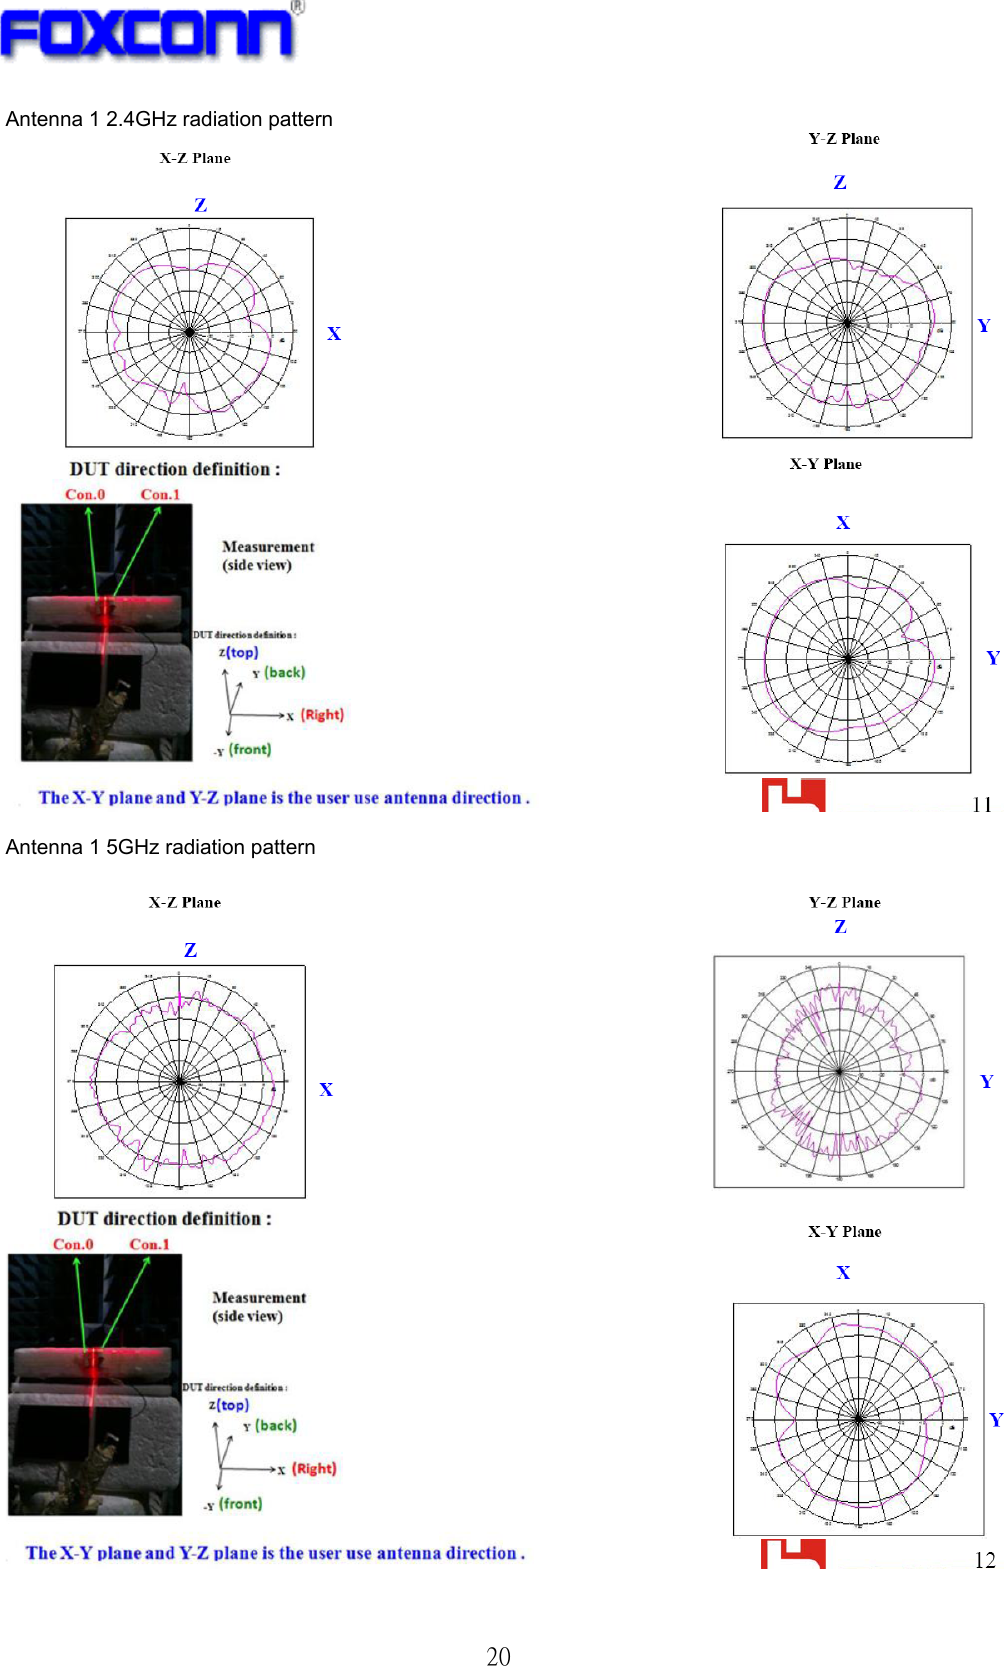   20 Antenna 1 2.4GHz radiation pattern   Antenna 1 5GHz radiation pattern    